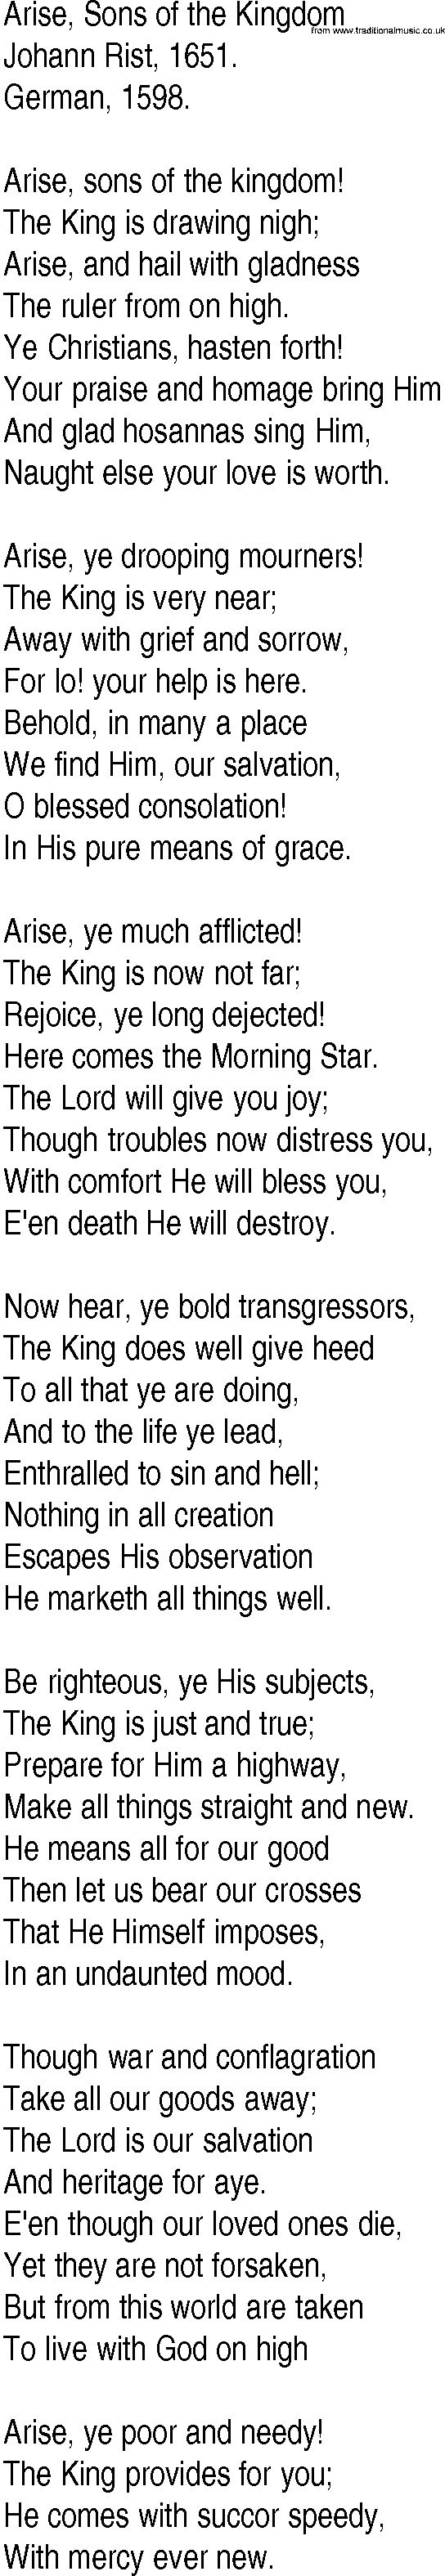 Hymn and Gospel Song: Arise, Sons of the Kingdom by Johann Rist lyrics